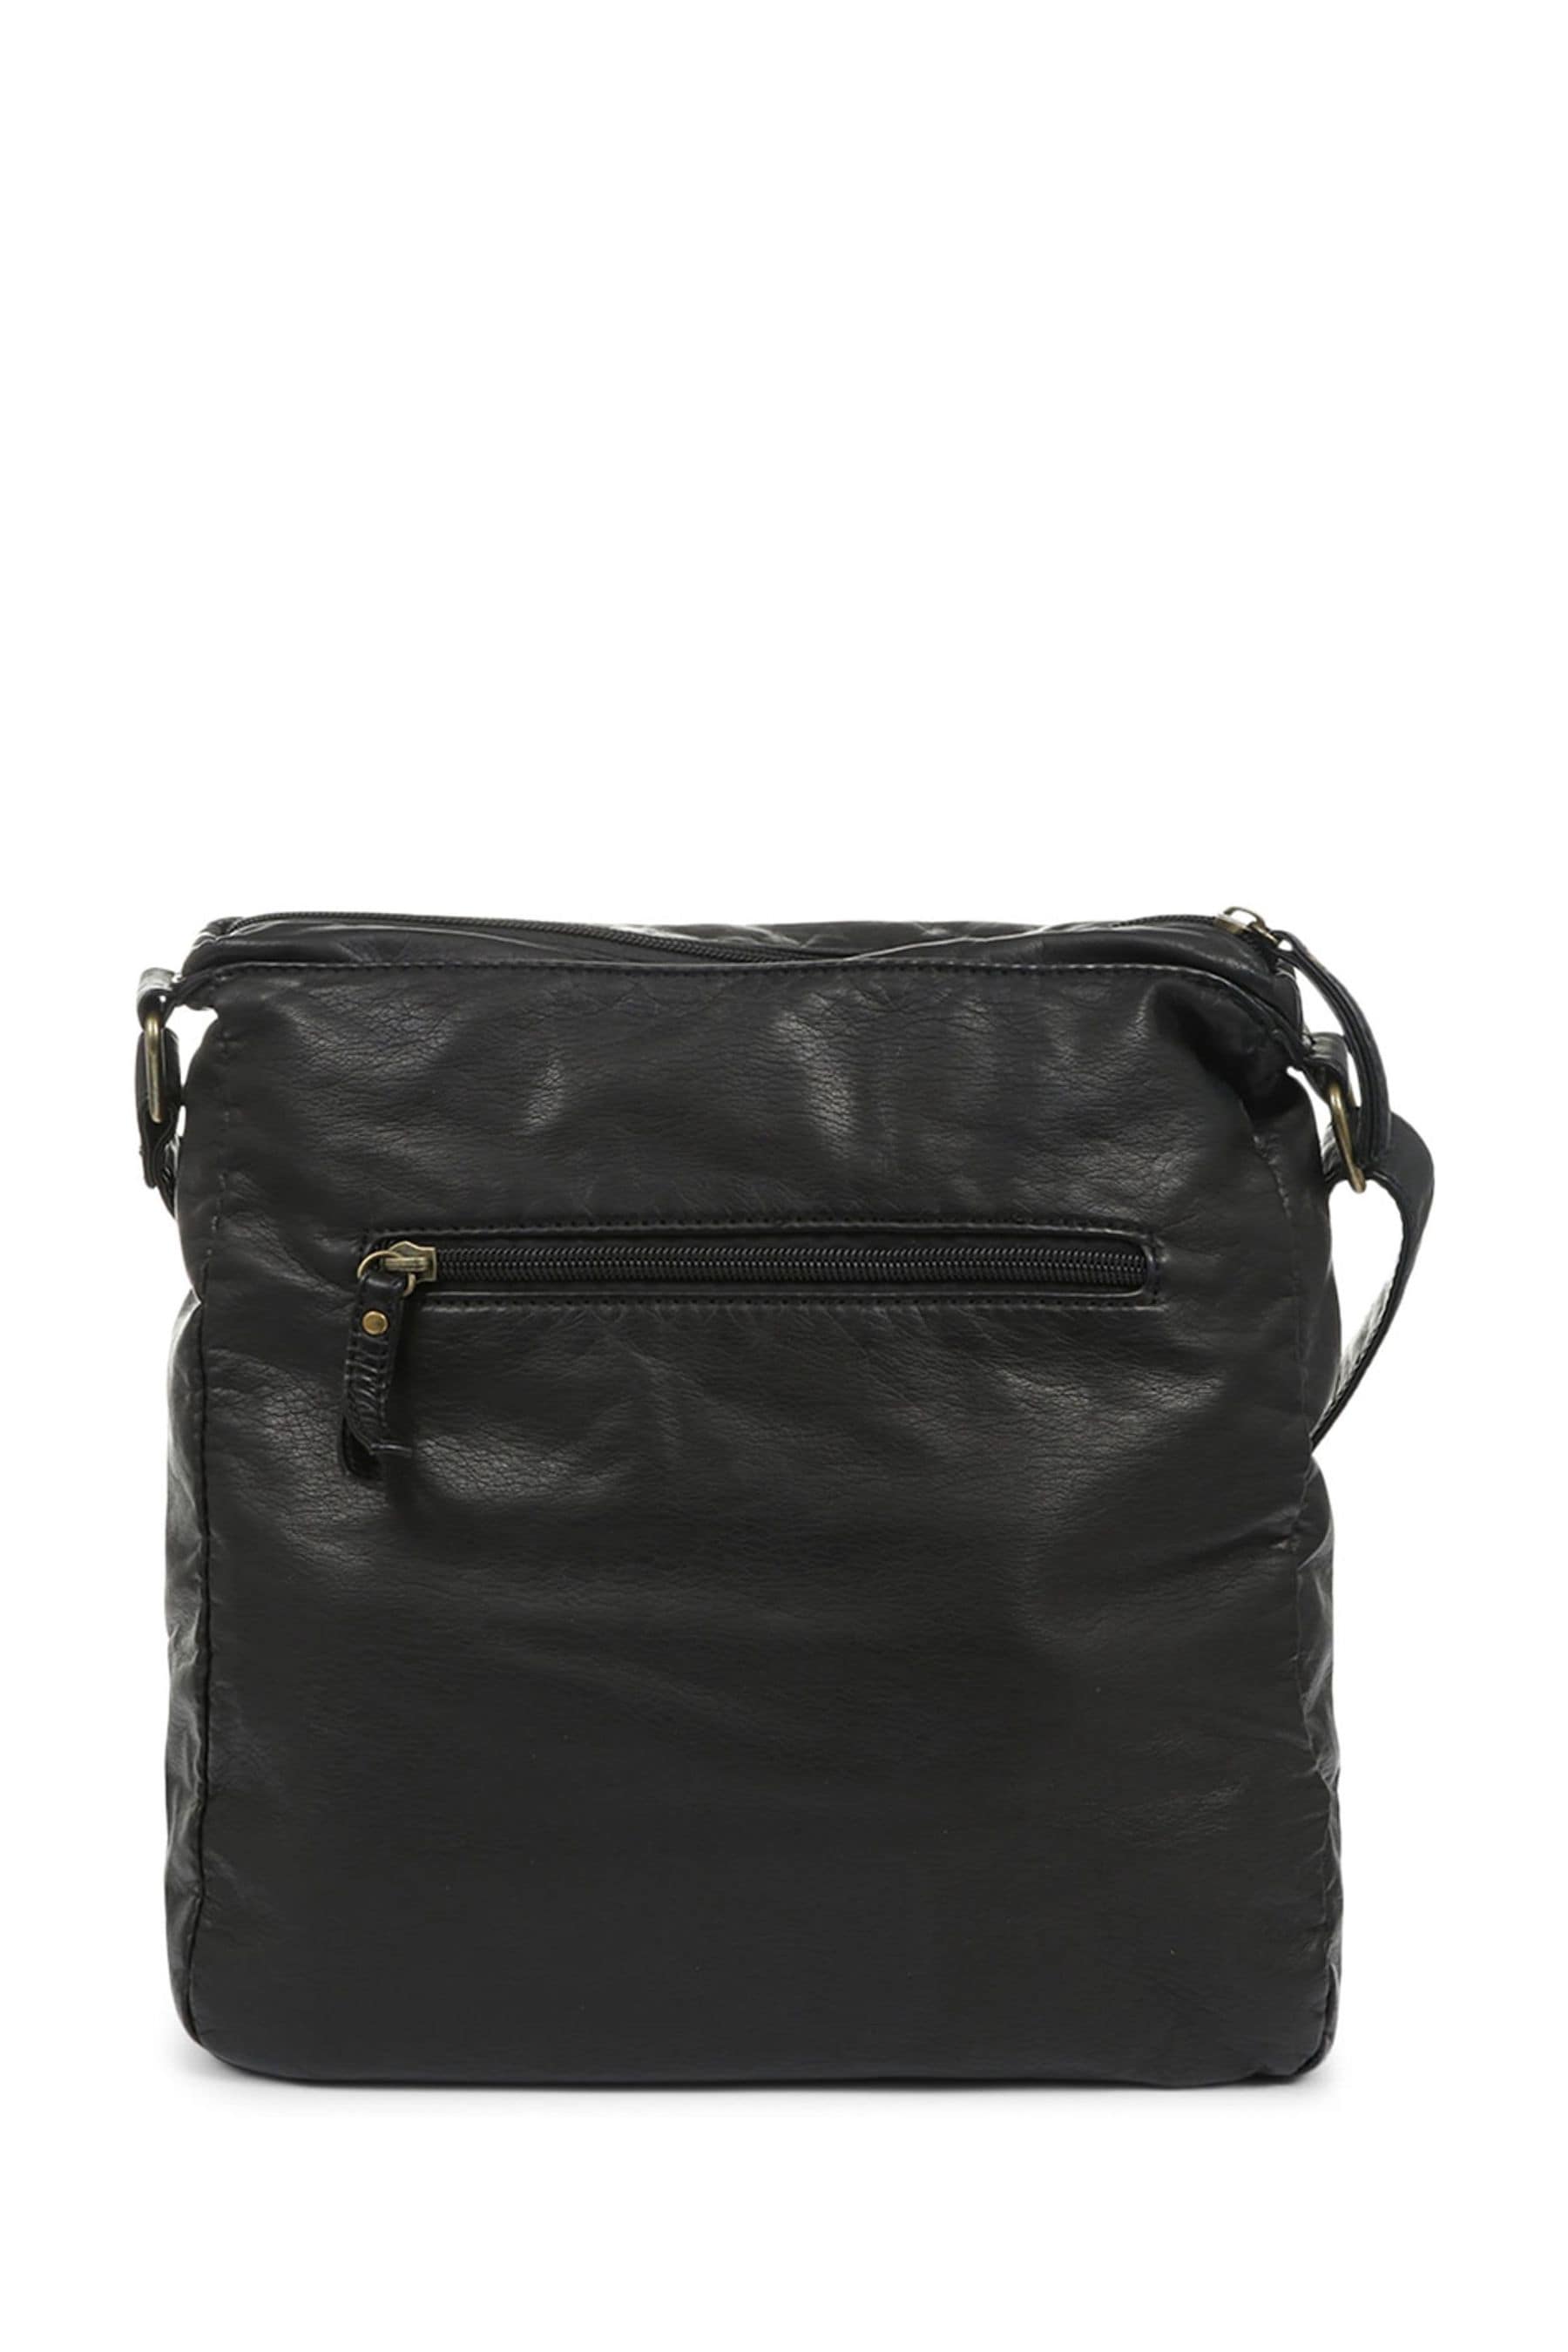 Buy Pavers Black Ladies Cross-Body Bag from the Next UK online shop